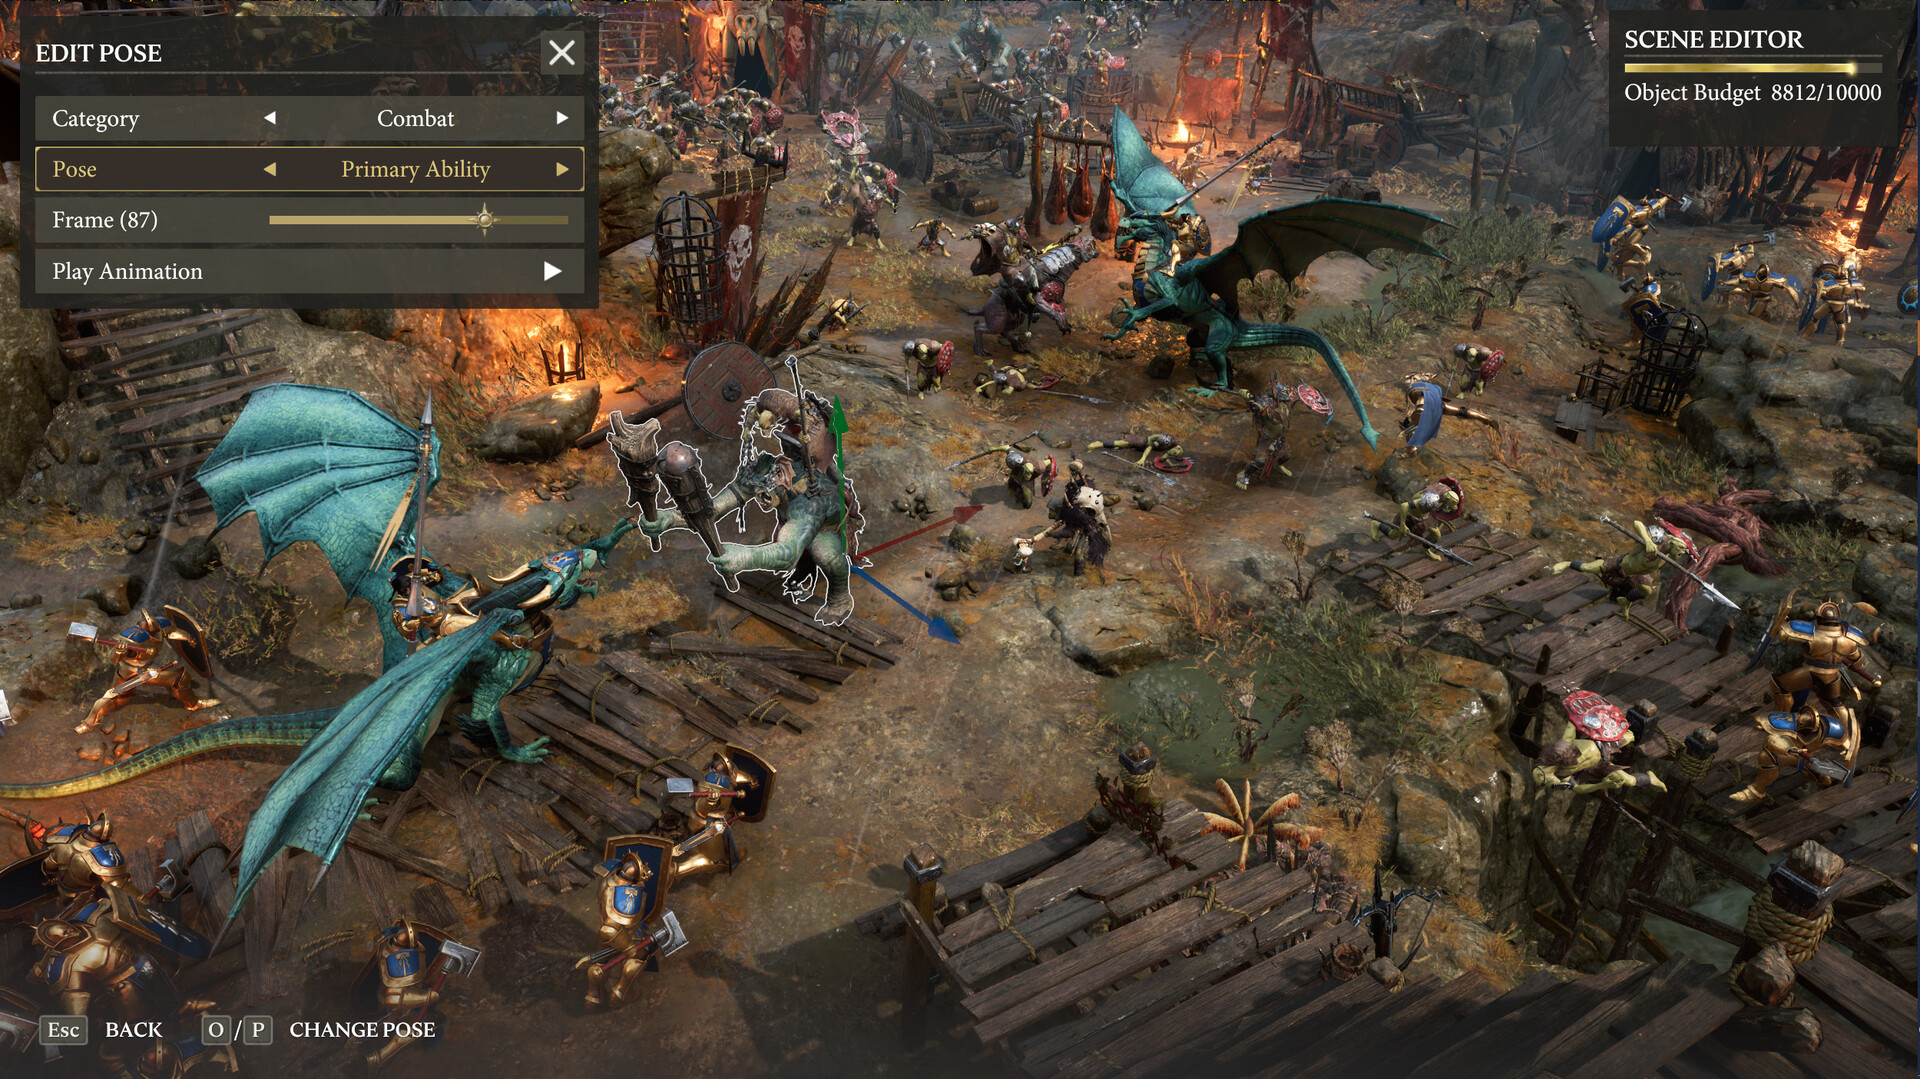 Warhammer Age of Sigmar: Tempestfall on Steam